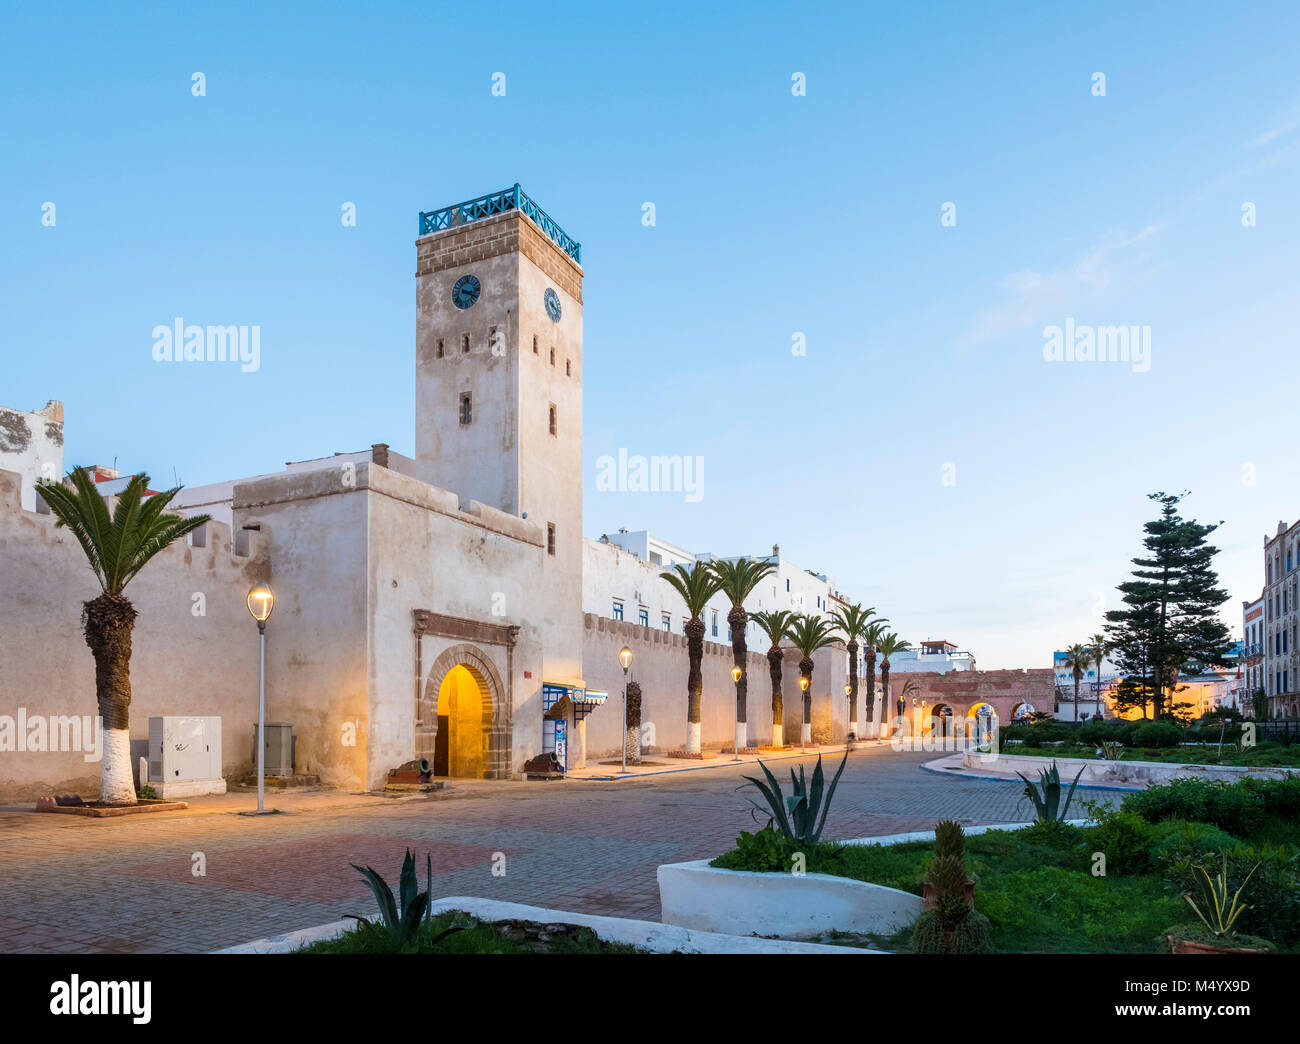 L'Horloge d'Essaouira clock tower and buildings in medina, Essaouira, Marrakesh-Safi, Morocco Stock Photo